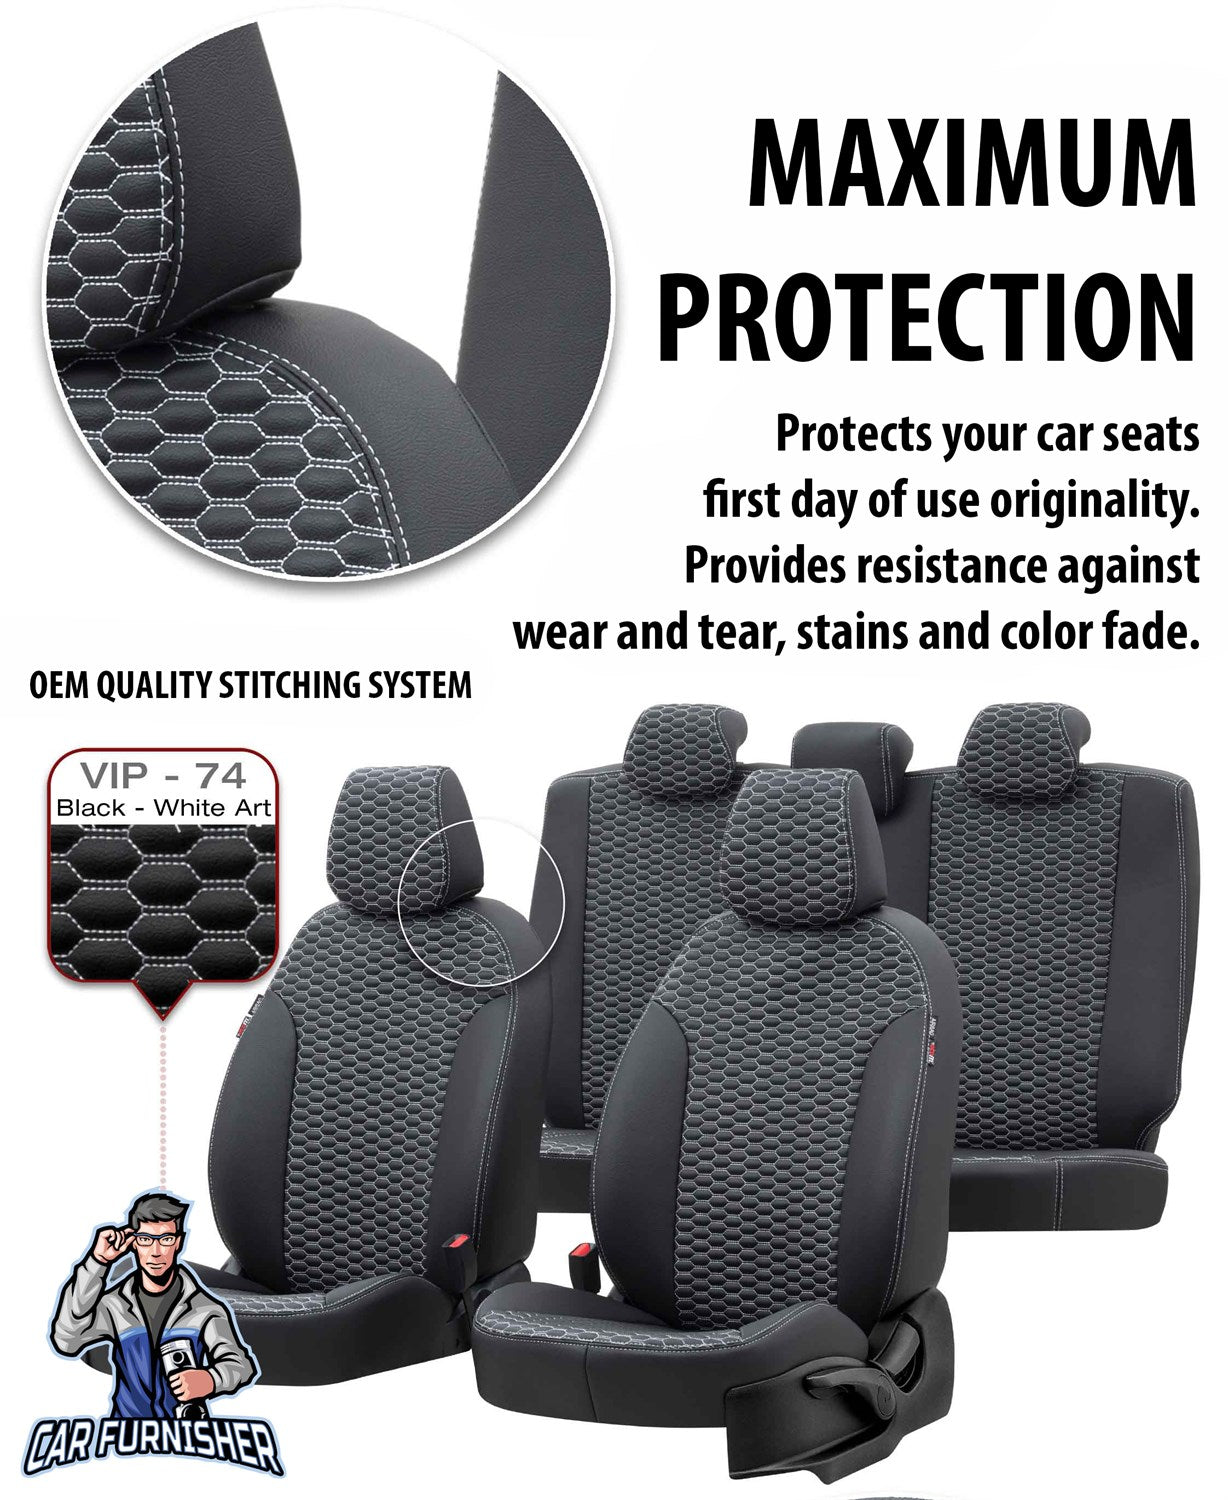 Kia Cerato Seat Covers Tokyo Leather Design Beige Leather